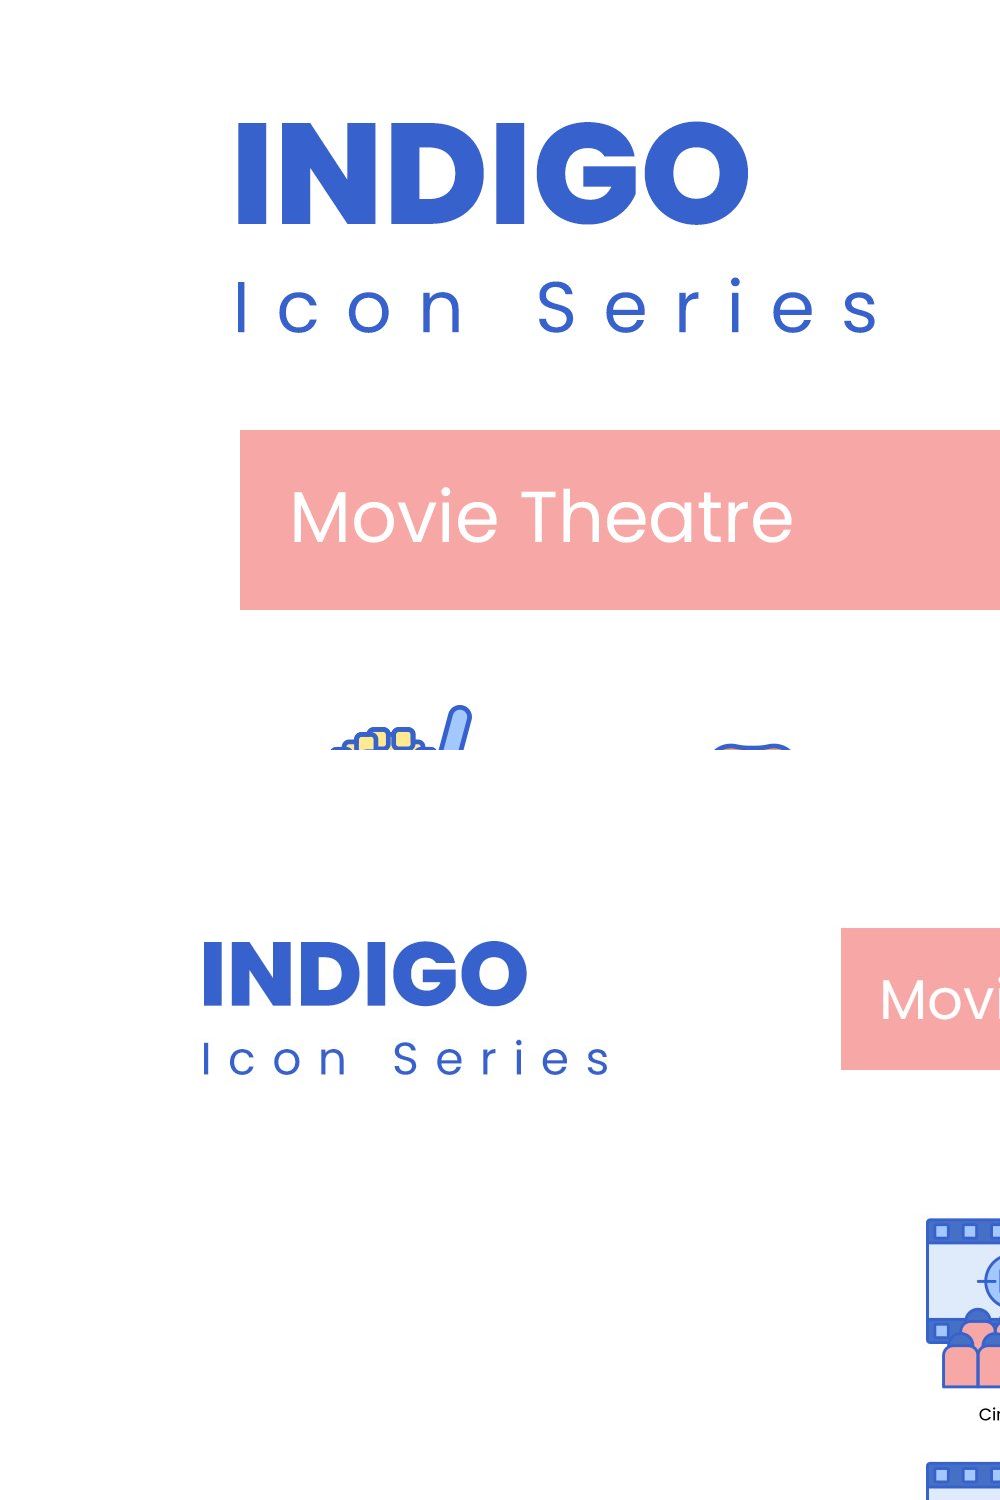 75 Movie Theater Icons - Indigo pinterest preview image.